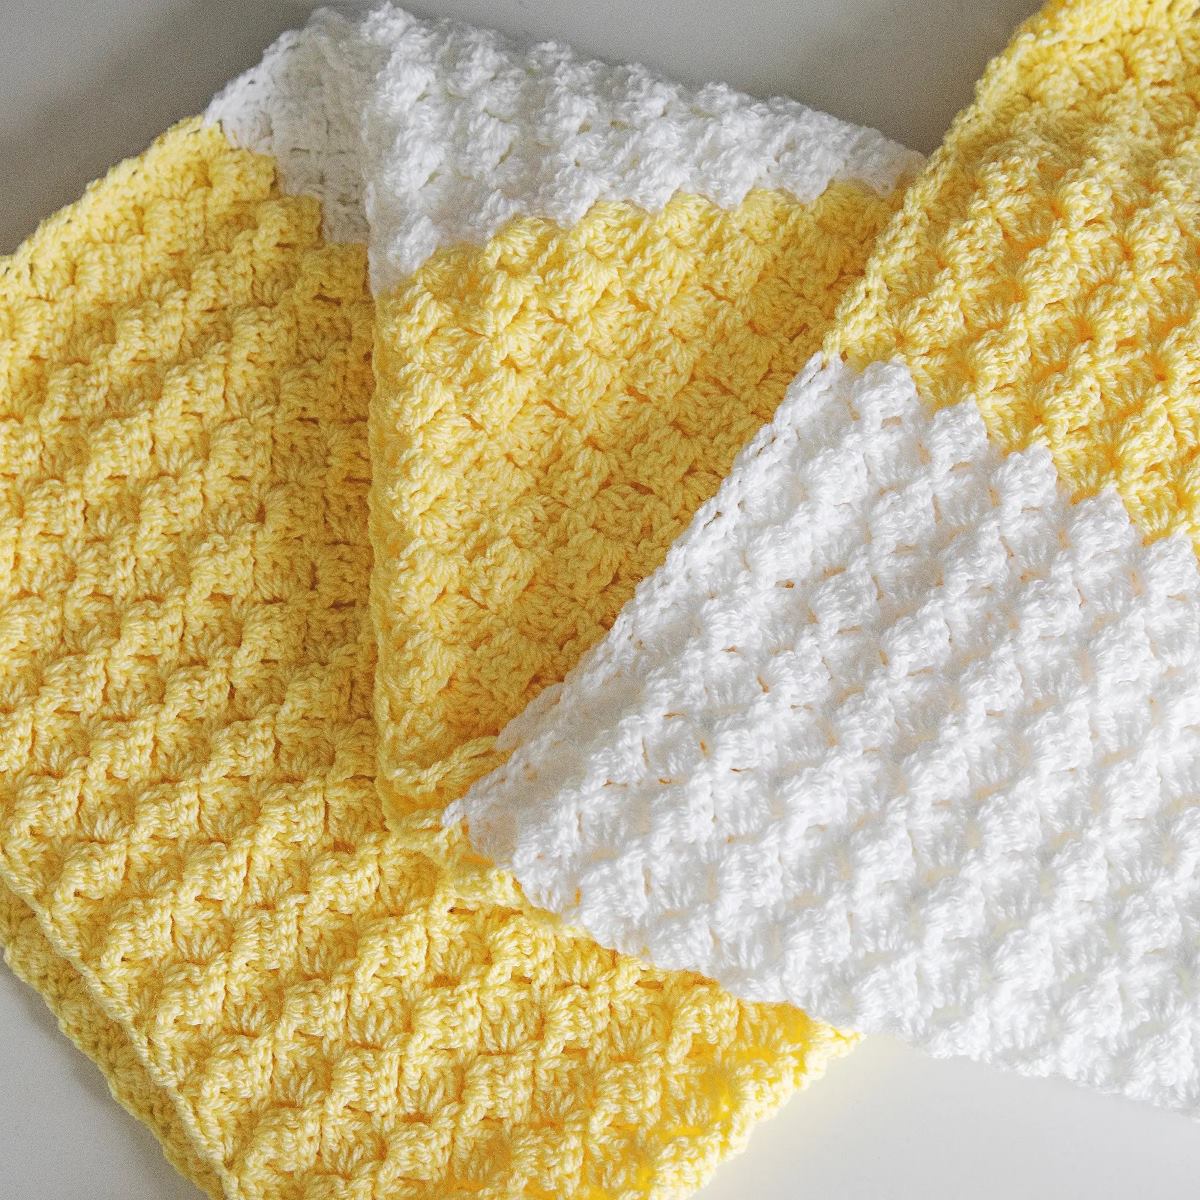 How to Repair A Crochet Blanket